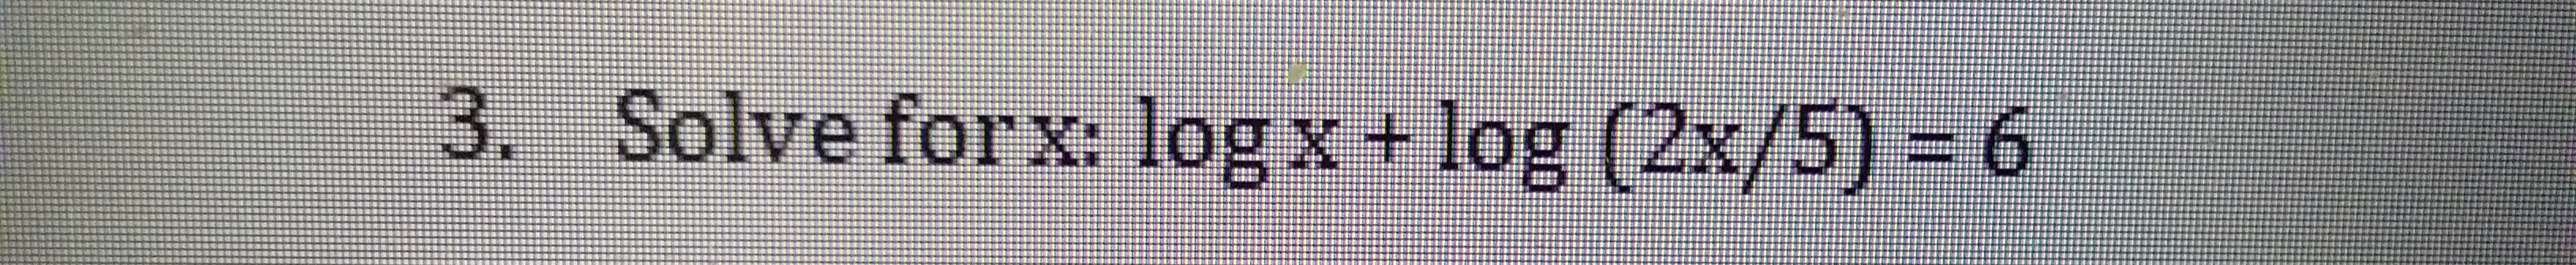 3. Solve forx: log x + log (2x/5) -6
